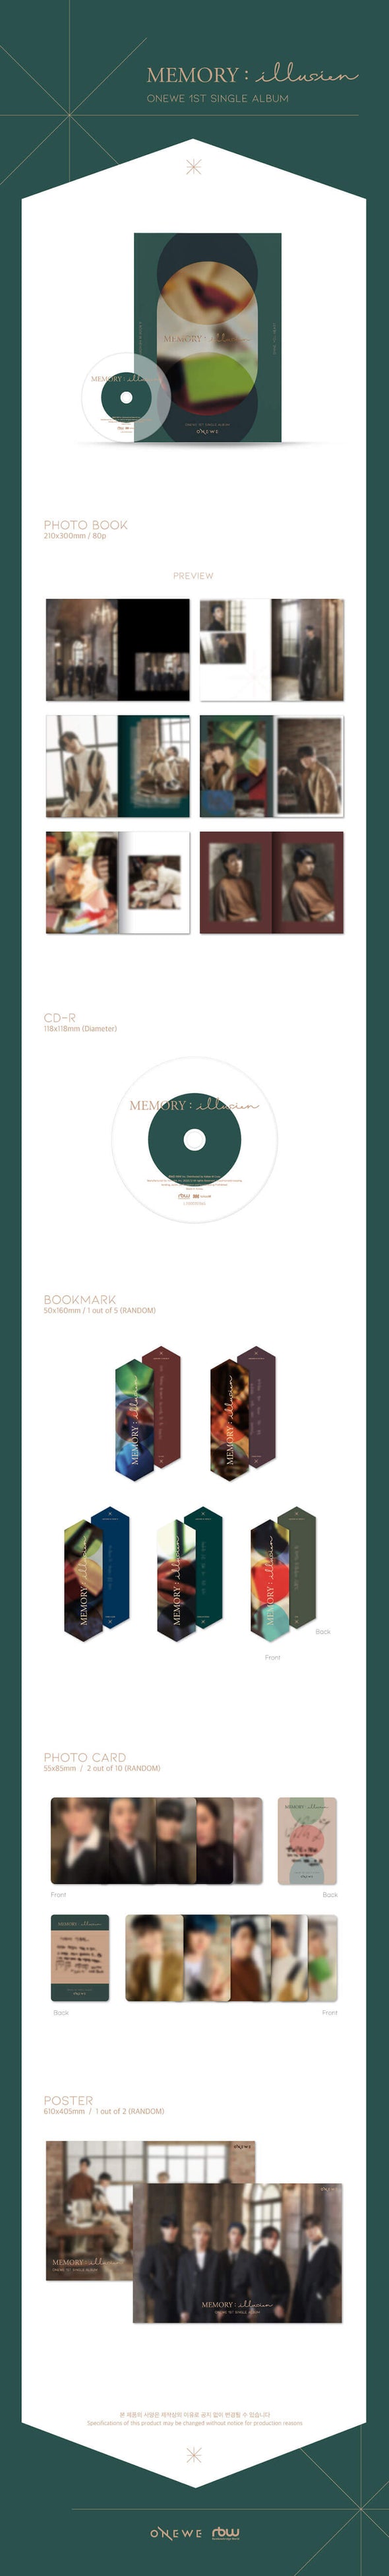 ONEWE - 'Memory Illusion' 1st Single Album